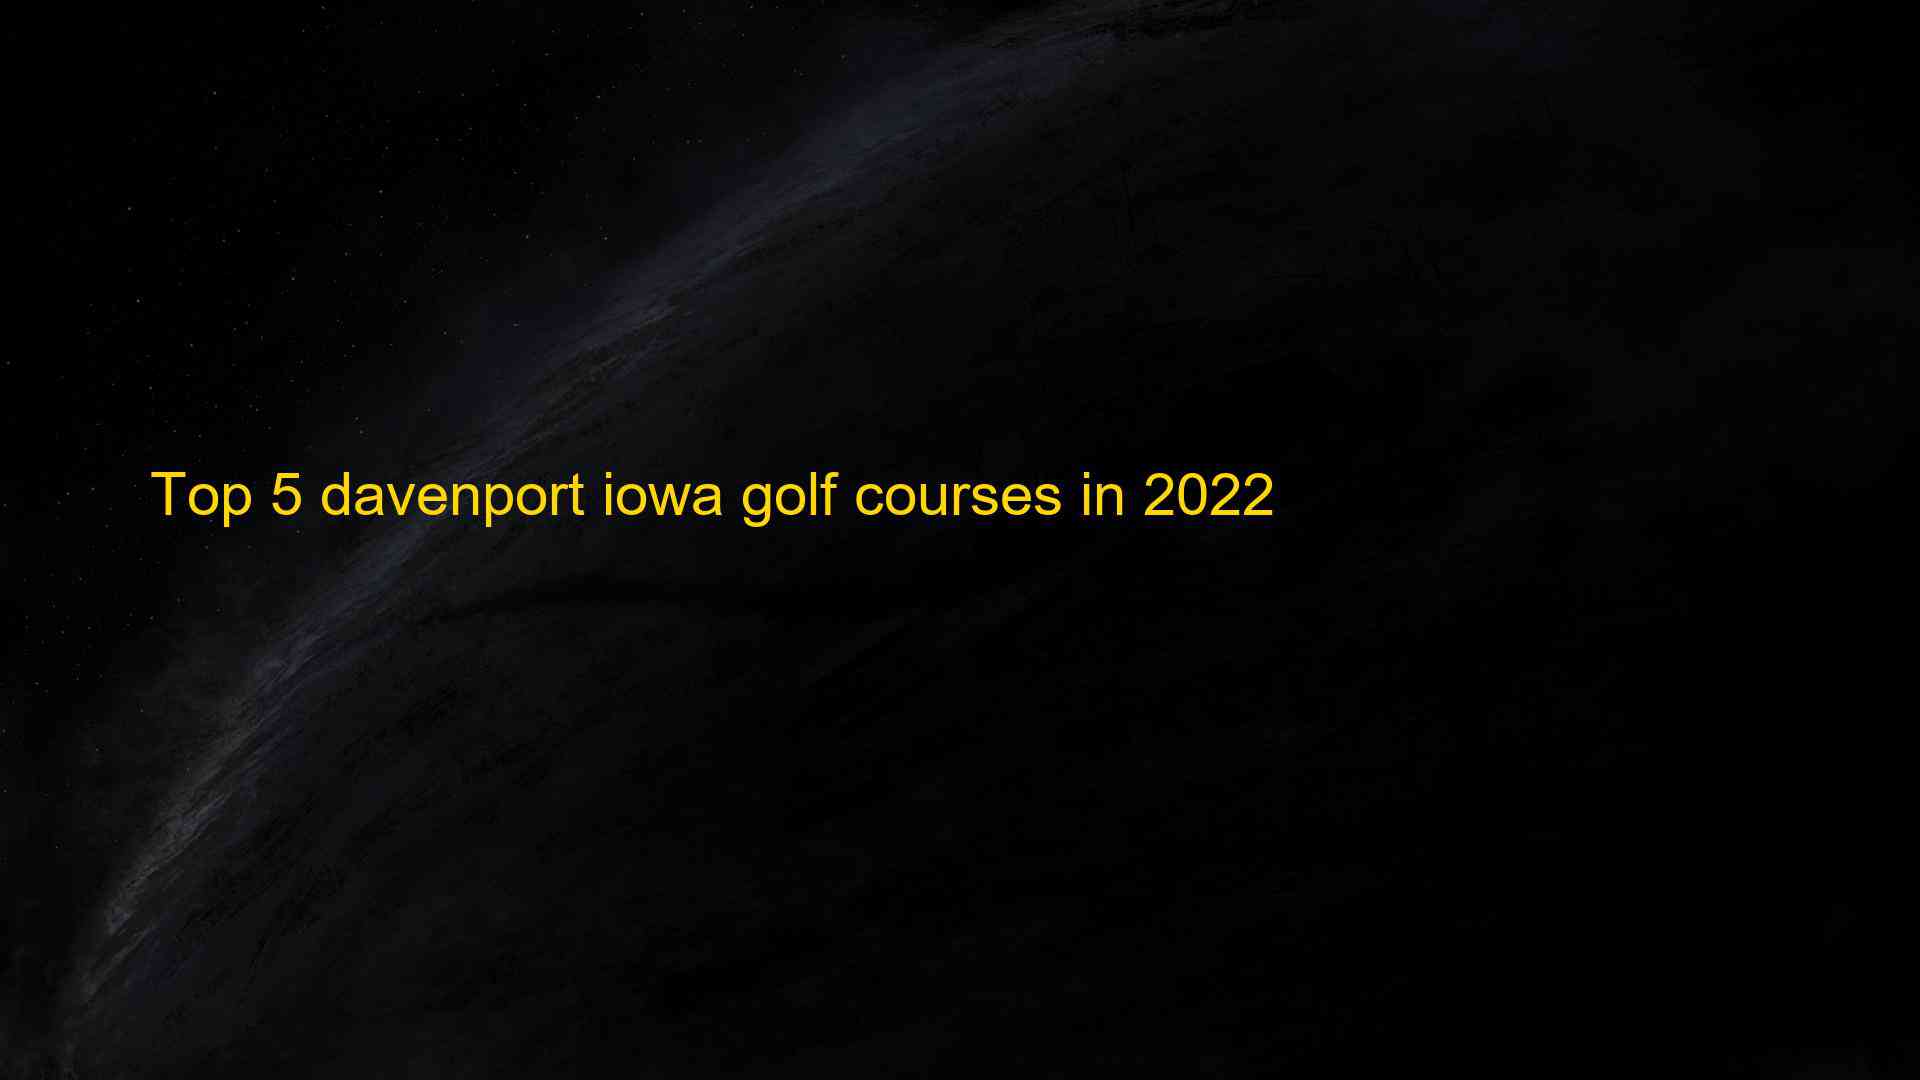 Top 5 davenport iowa golf courses in 2022 1661822762